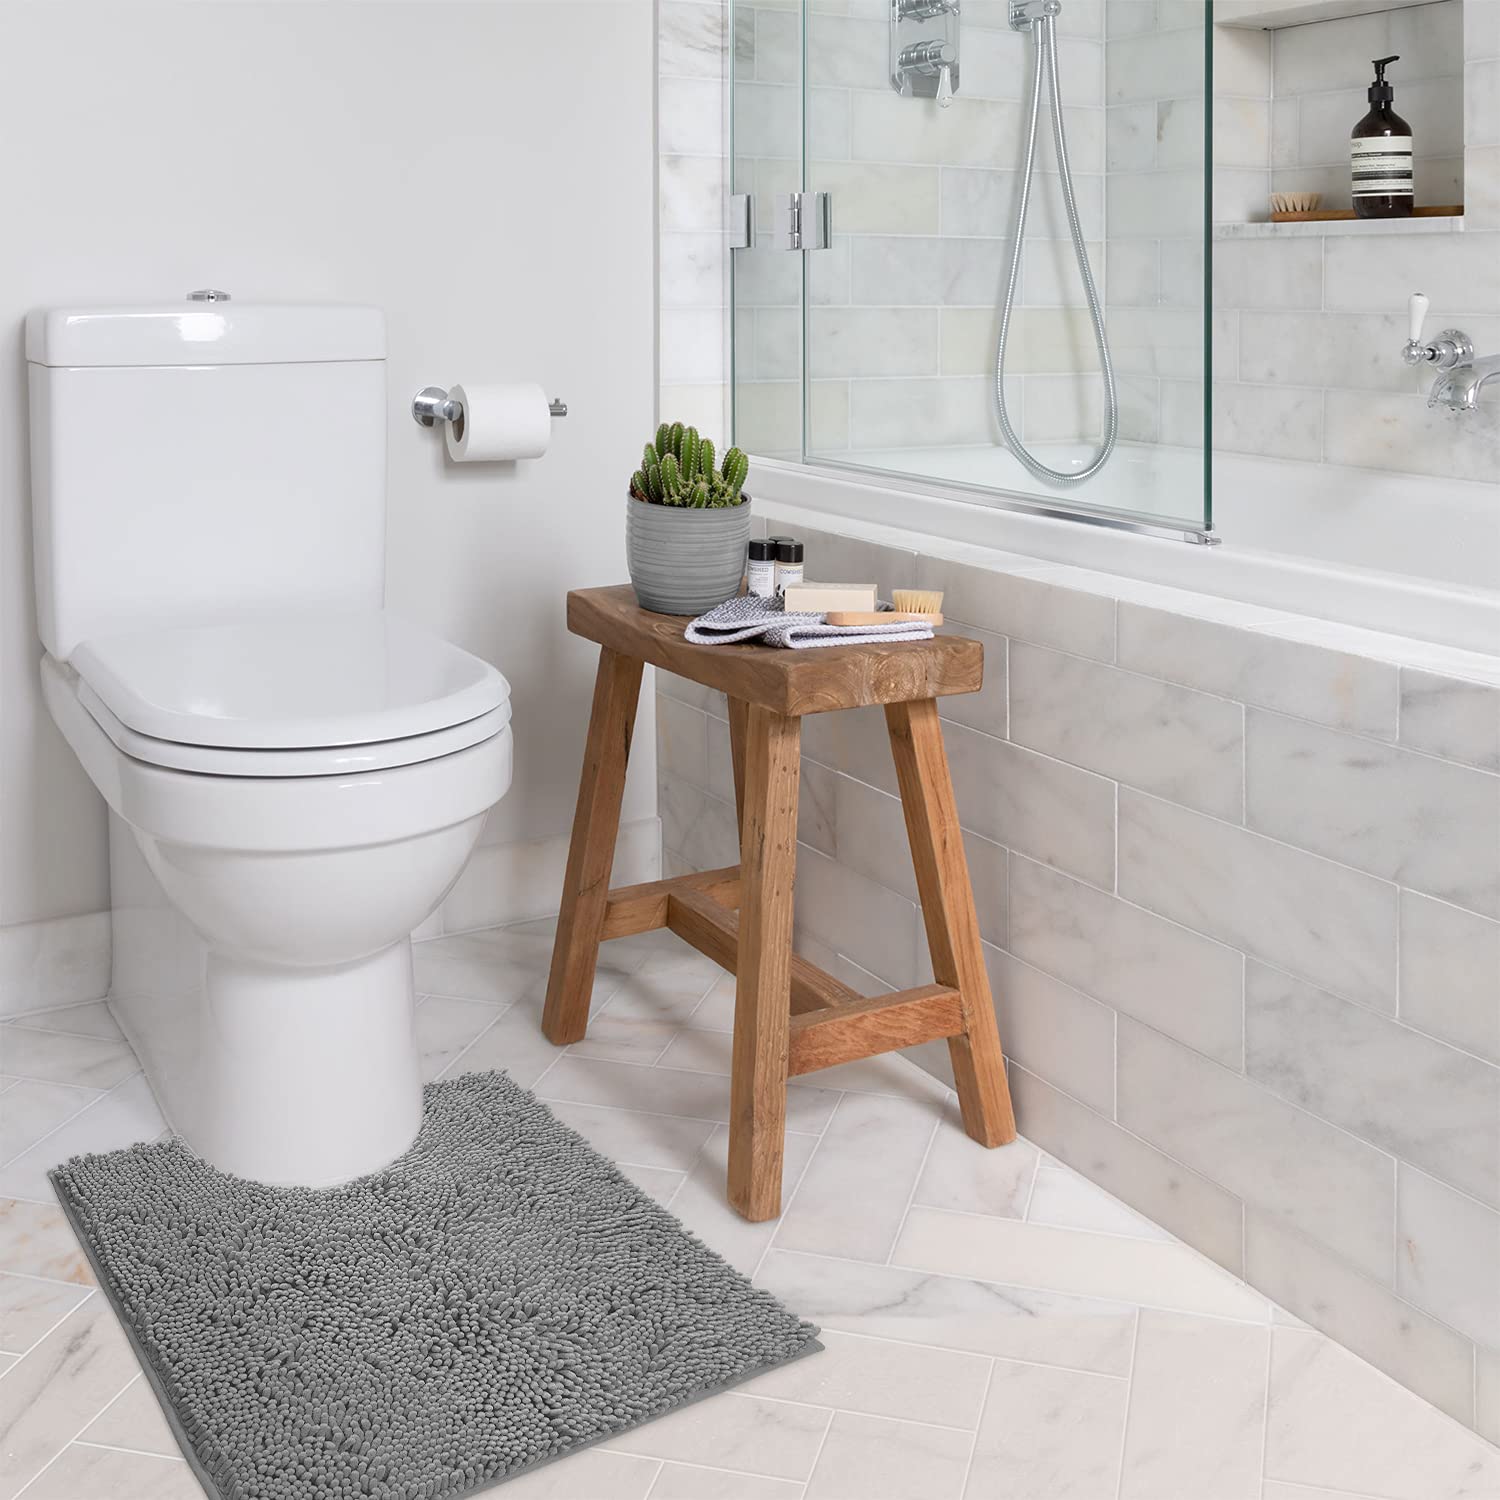 LuxUrux Bath Mat - Toilet Rugs u Shaped- Extra-Soft Plush Bath Bathroom Rug,1'' Chenille Microfiber Material, Super Absorbent Shaggy Machine Wash & Dry (20 x 20, Light Grey)  - Acceptable